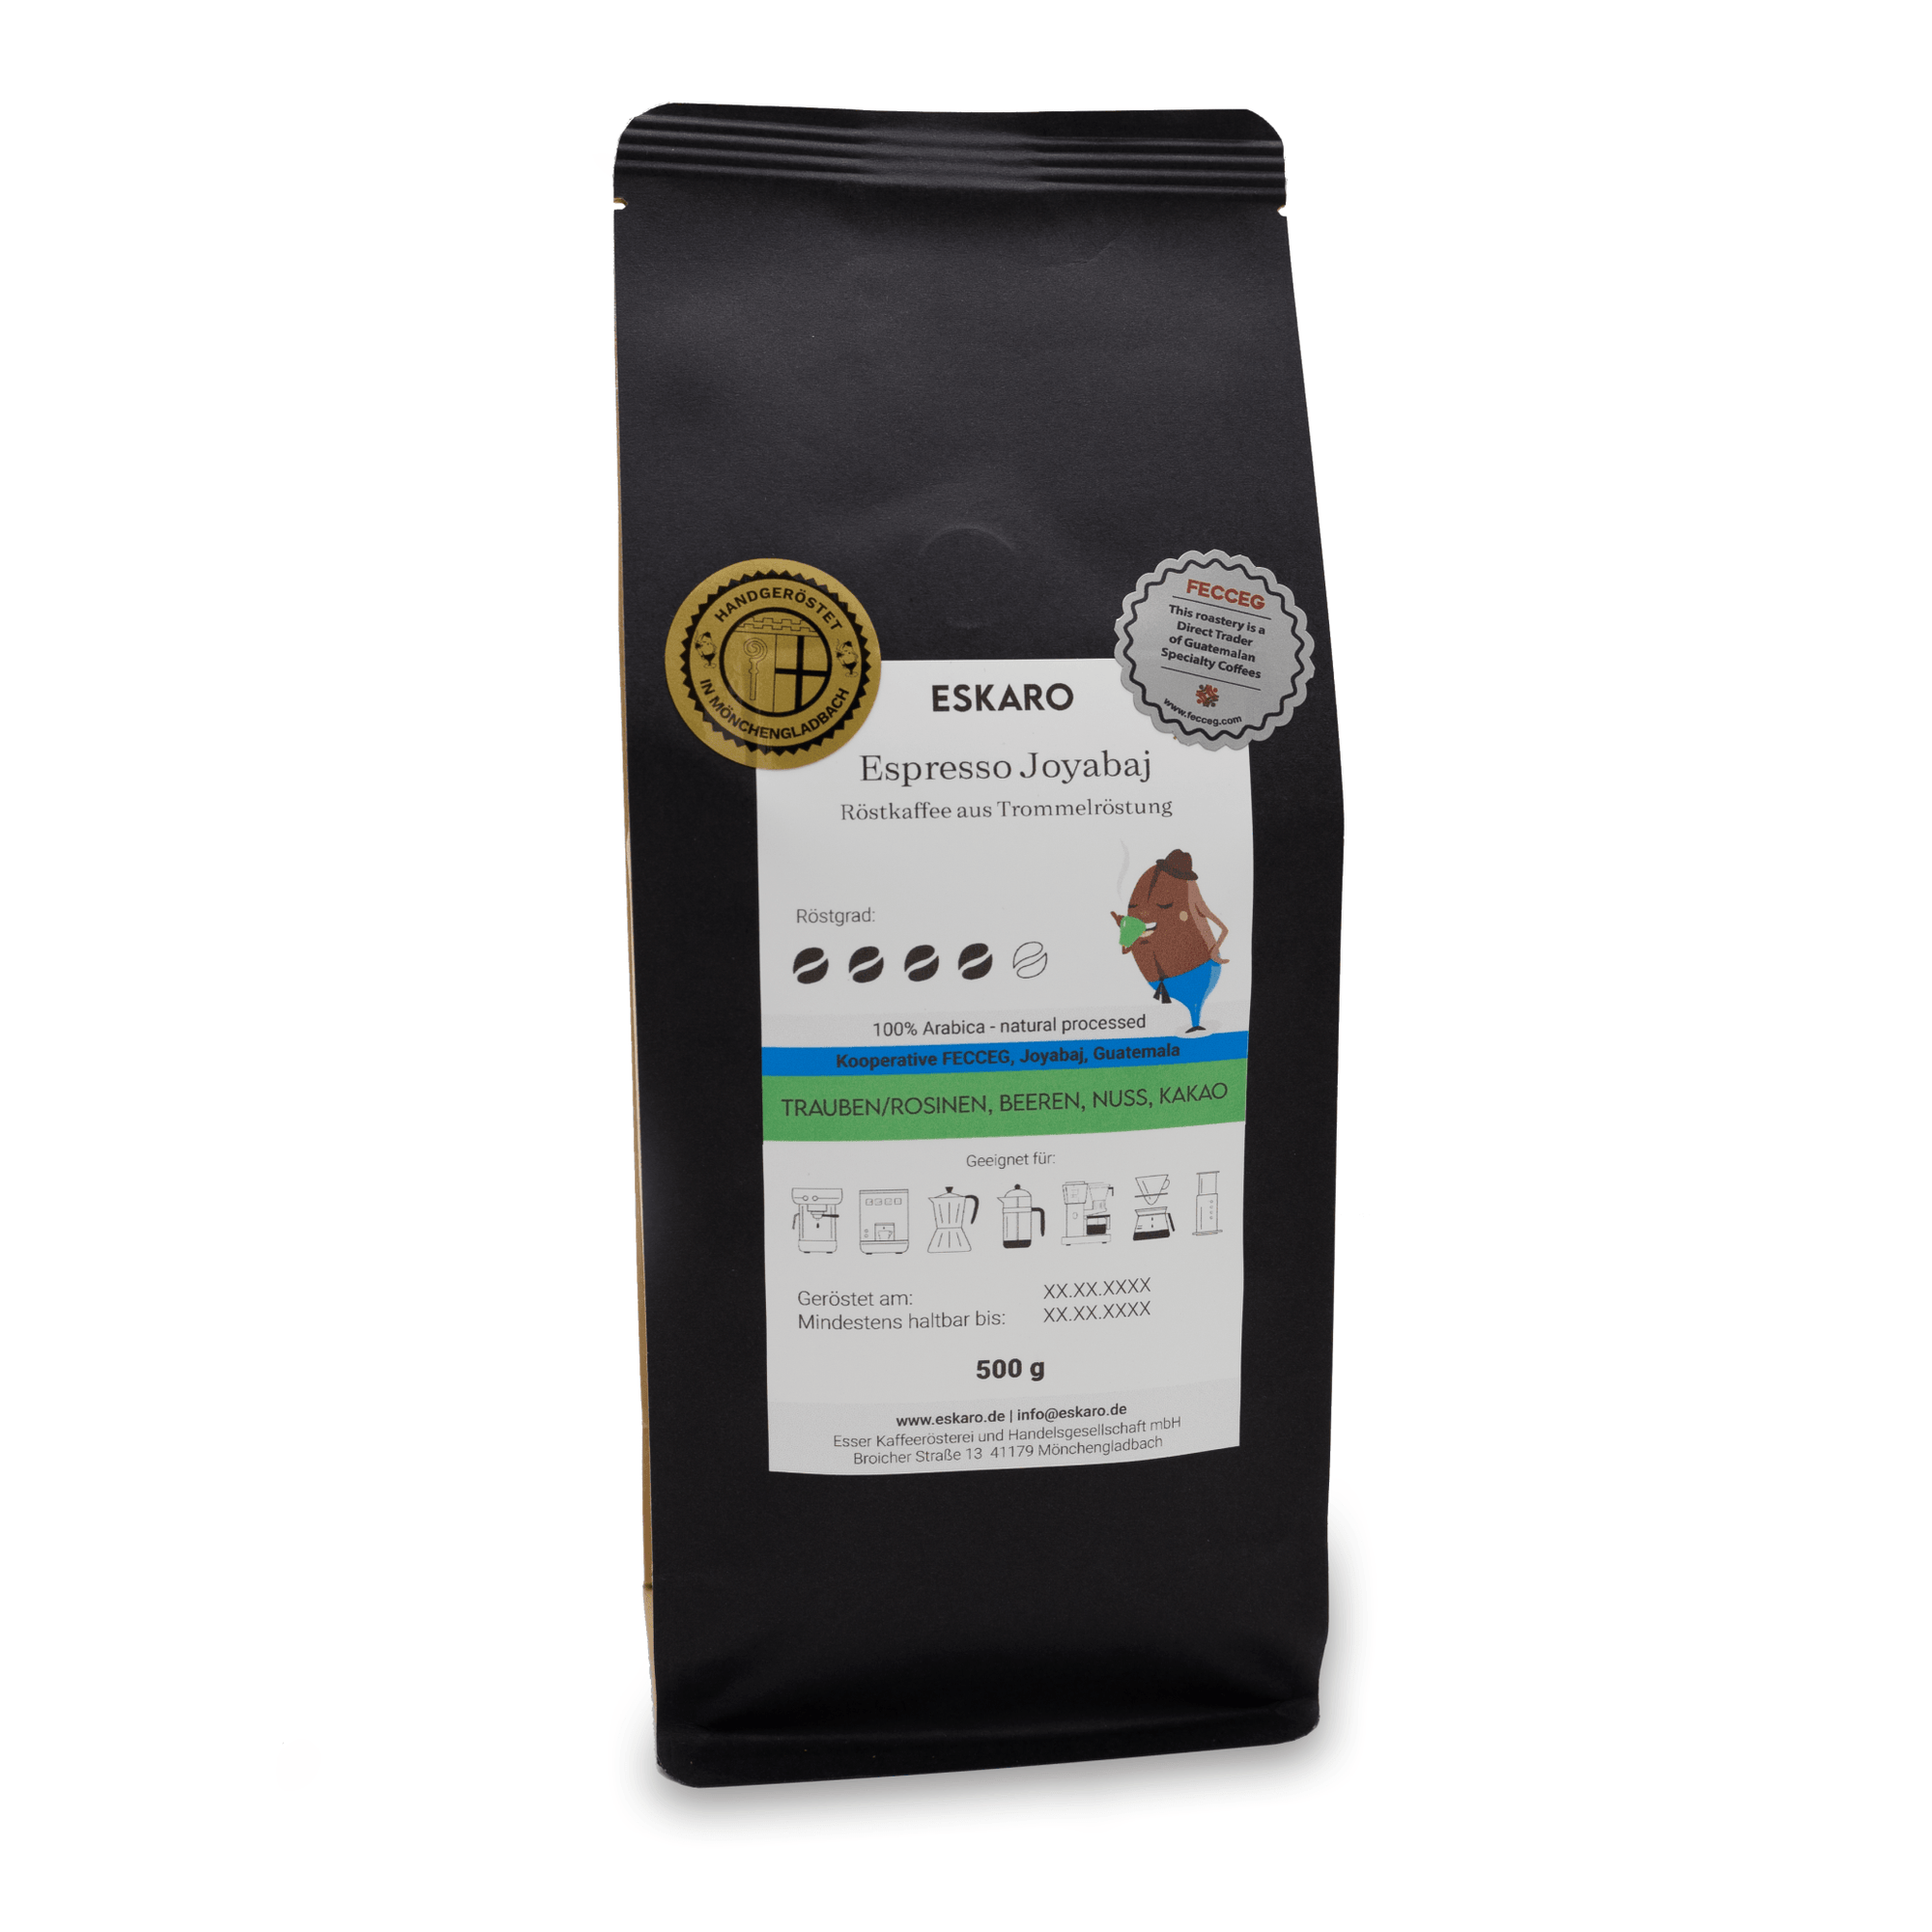 Eskaro Espresso Joyabaj - Eskaro - Esser Kaffeerösterei und Handelsgesellschaft mbH